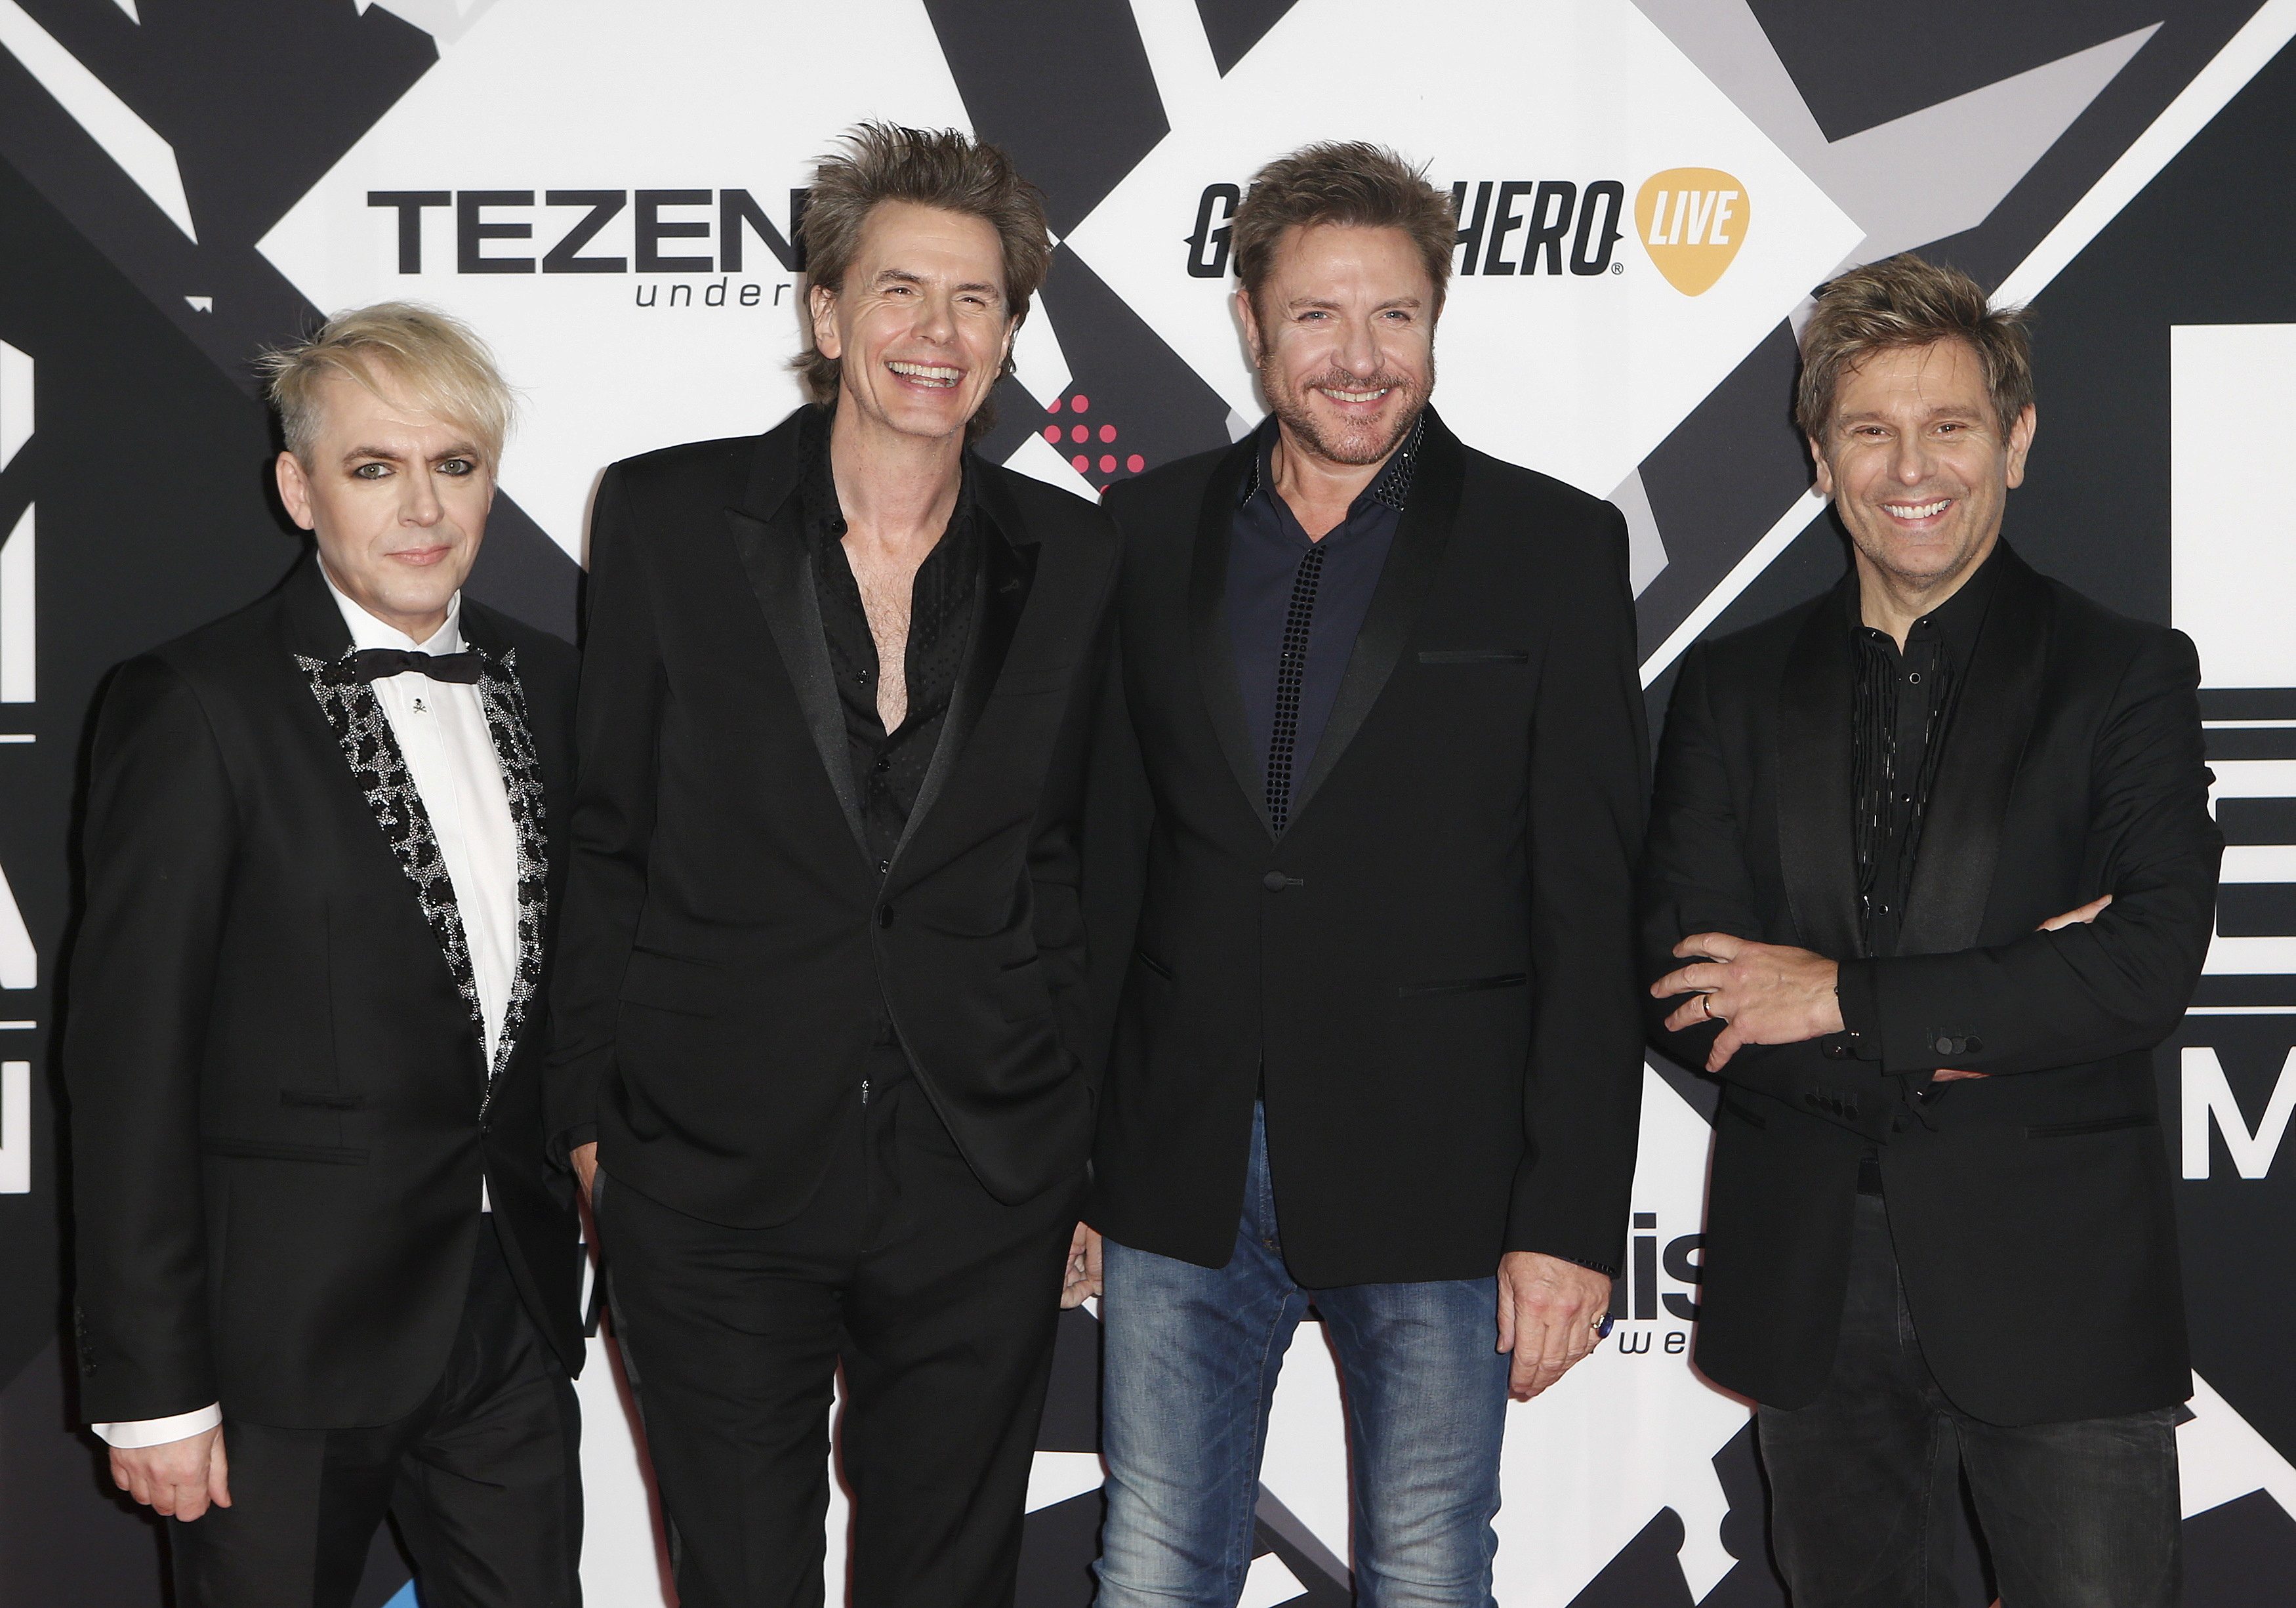 Duran Duran to drop new album 40 years after debut